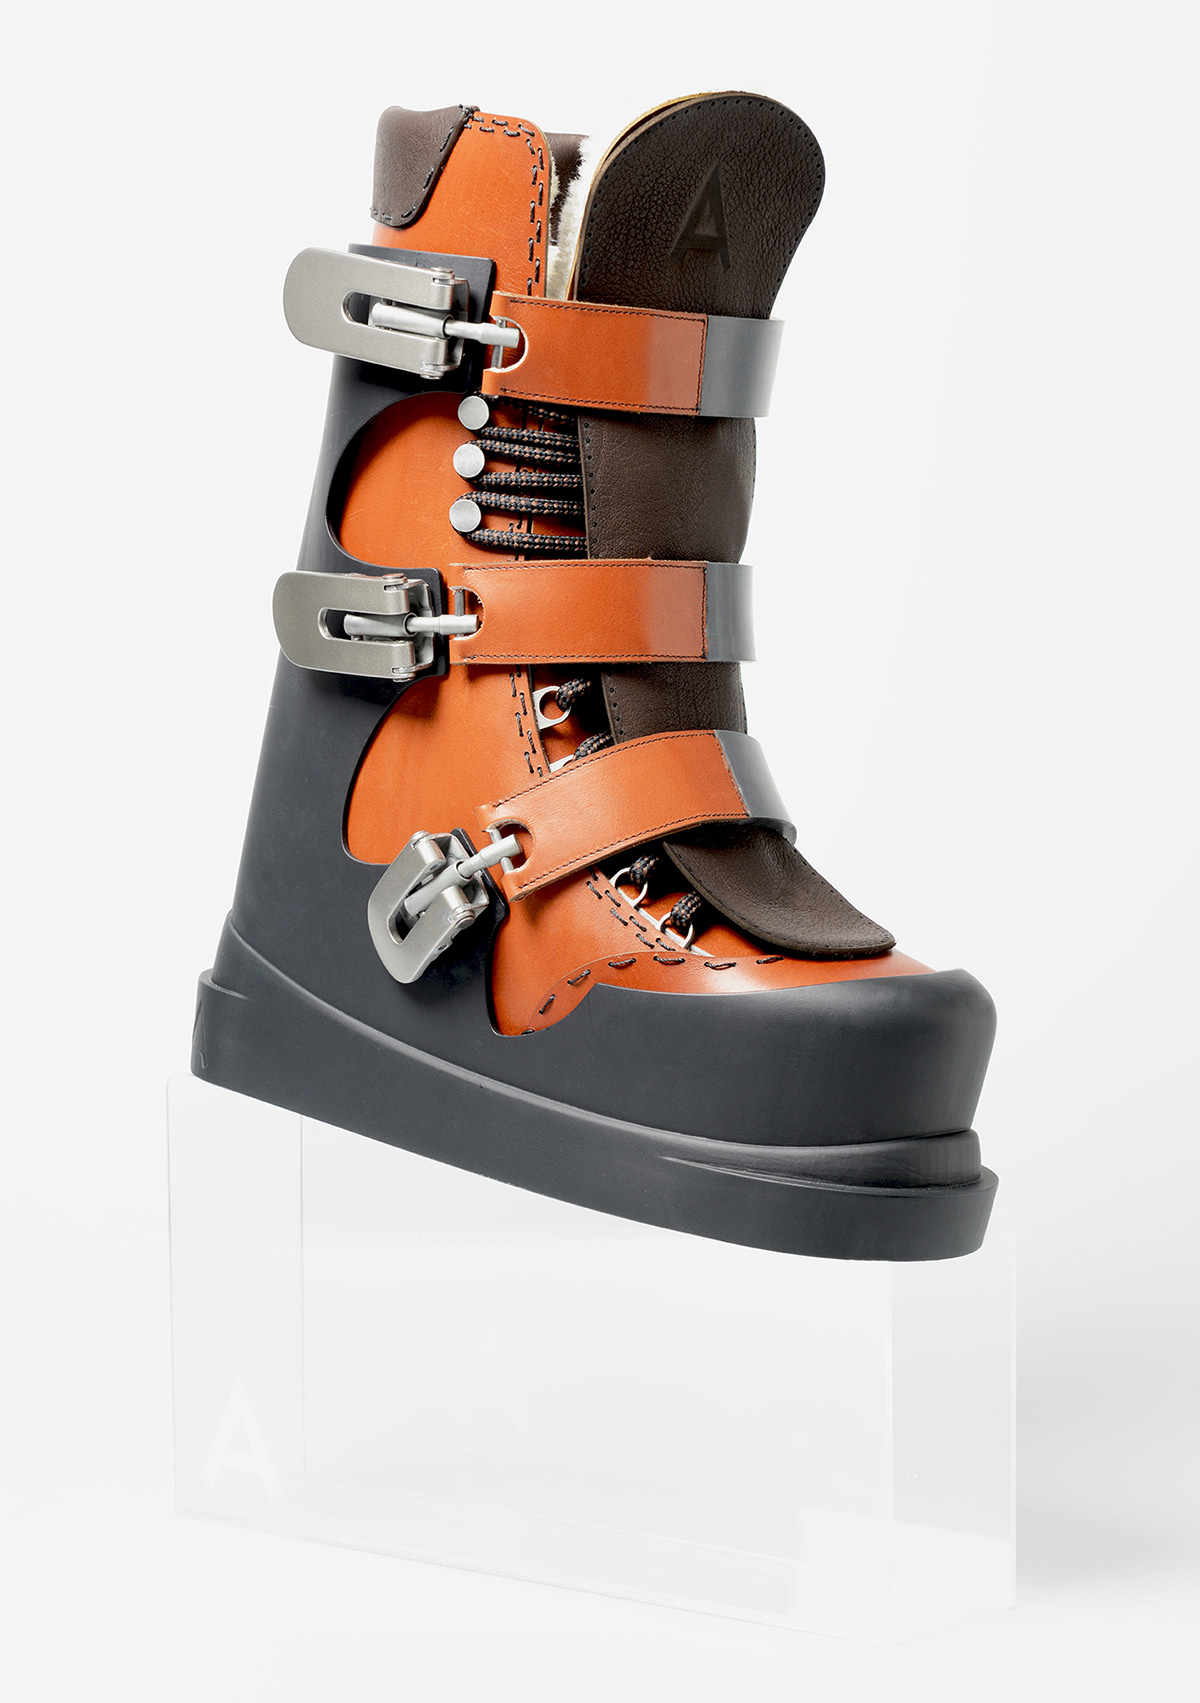 Ski boot shoe ski boot slope apres snow leather 3d printing walk skiing design footwear fashion design Style